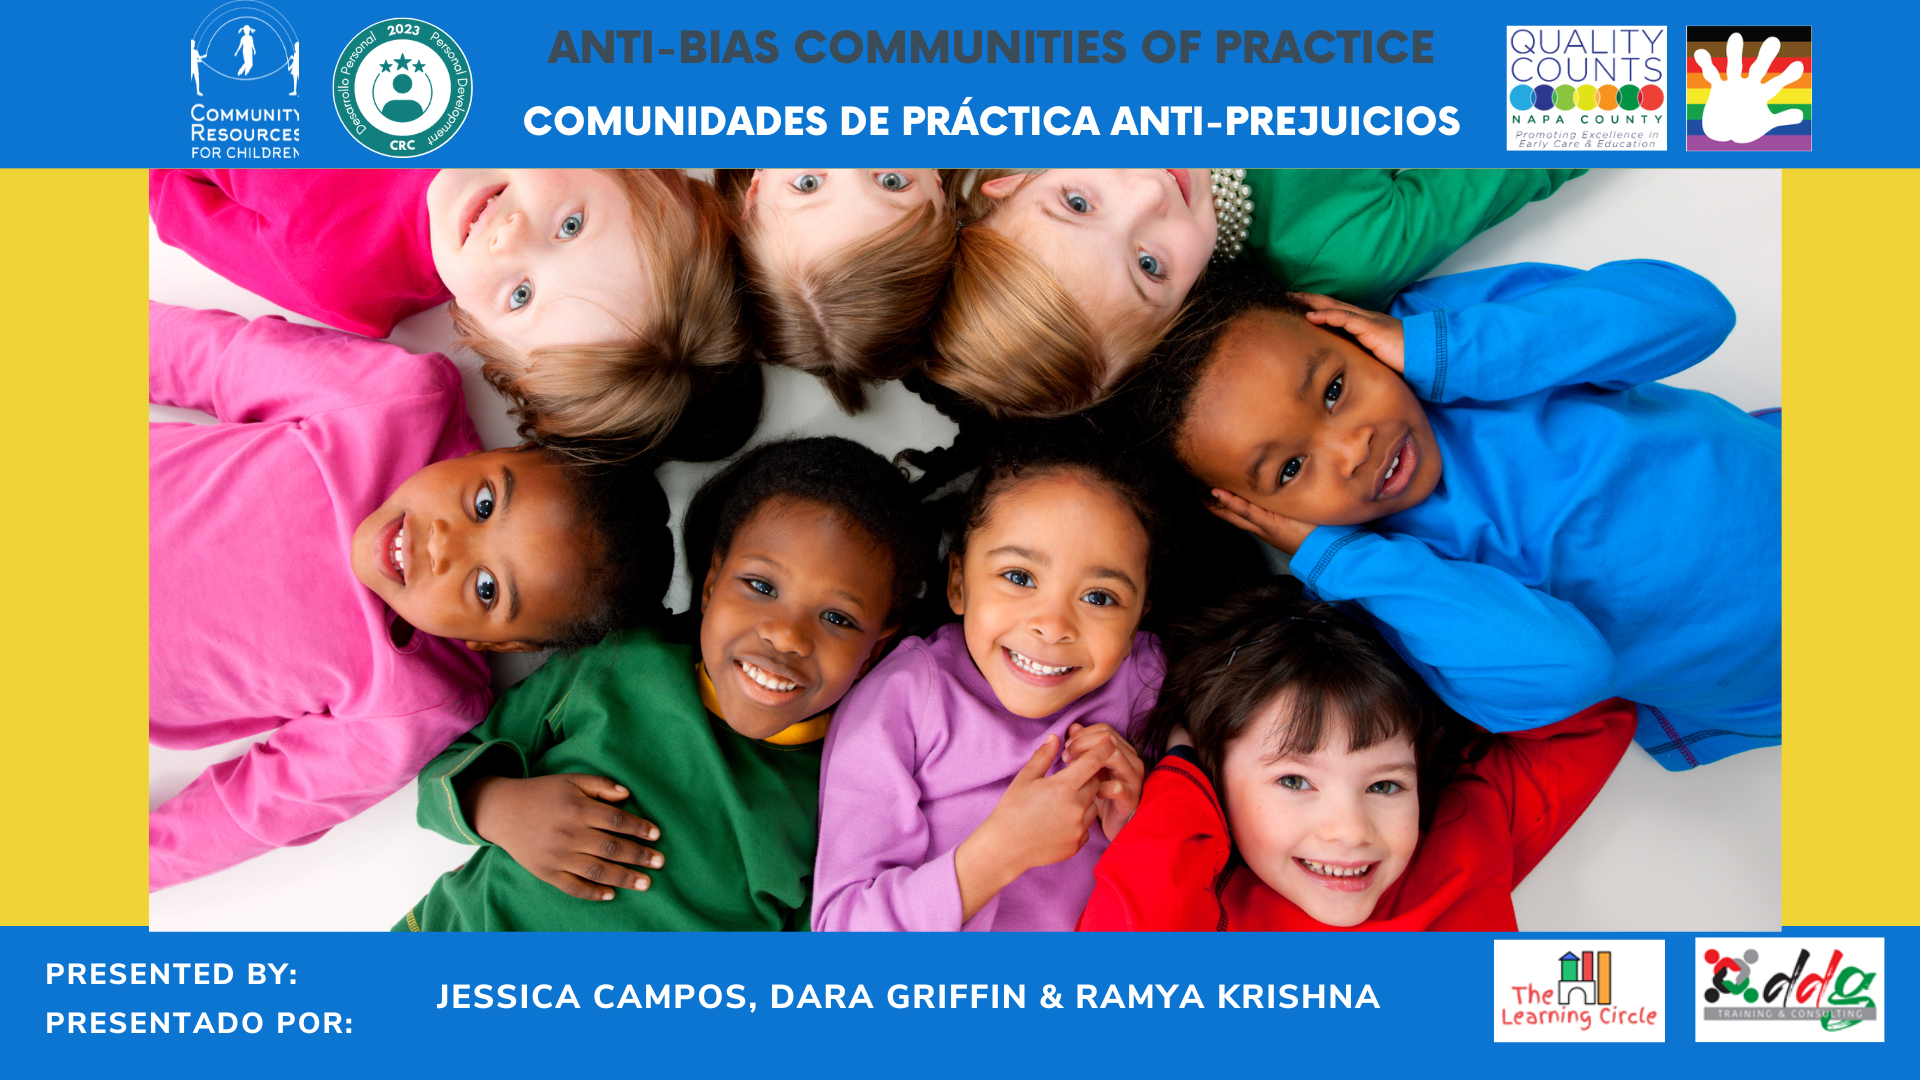 This image is presenting a community of practice that promotes personal development and resources for children in Napa County, California. Full Text: 20,23 Personal ANTI-BIAS COMMUNITIES OF PRACTICE QUALITY COUNTS COMMUNITY COMUNIDADES DE PRÁCTICA ANTI-PREJUICIOS NAPA UNTY RESOURCES Promotin Desarrollo Persona! FOR CHILDREN CRC Farle Care & Education PRESENTED BY: odda Then PRESENTADO POR: JESSICA CAMPOS, DARA GRIFFIN & RAMYA KRISHNA Learning Circle